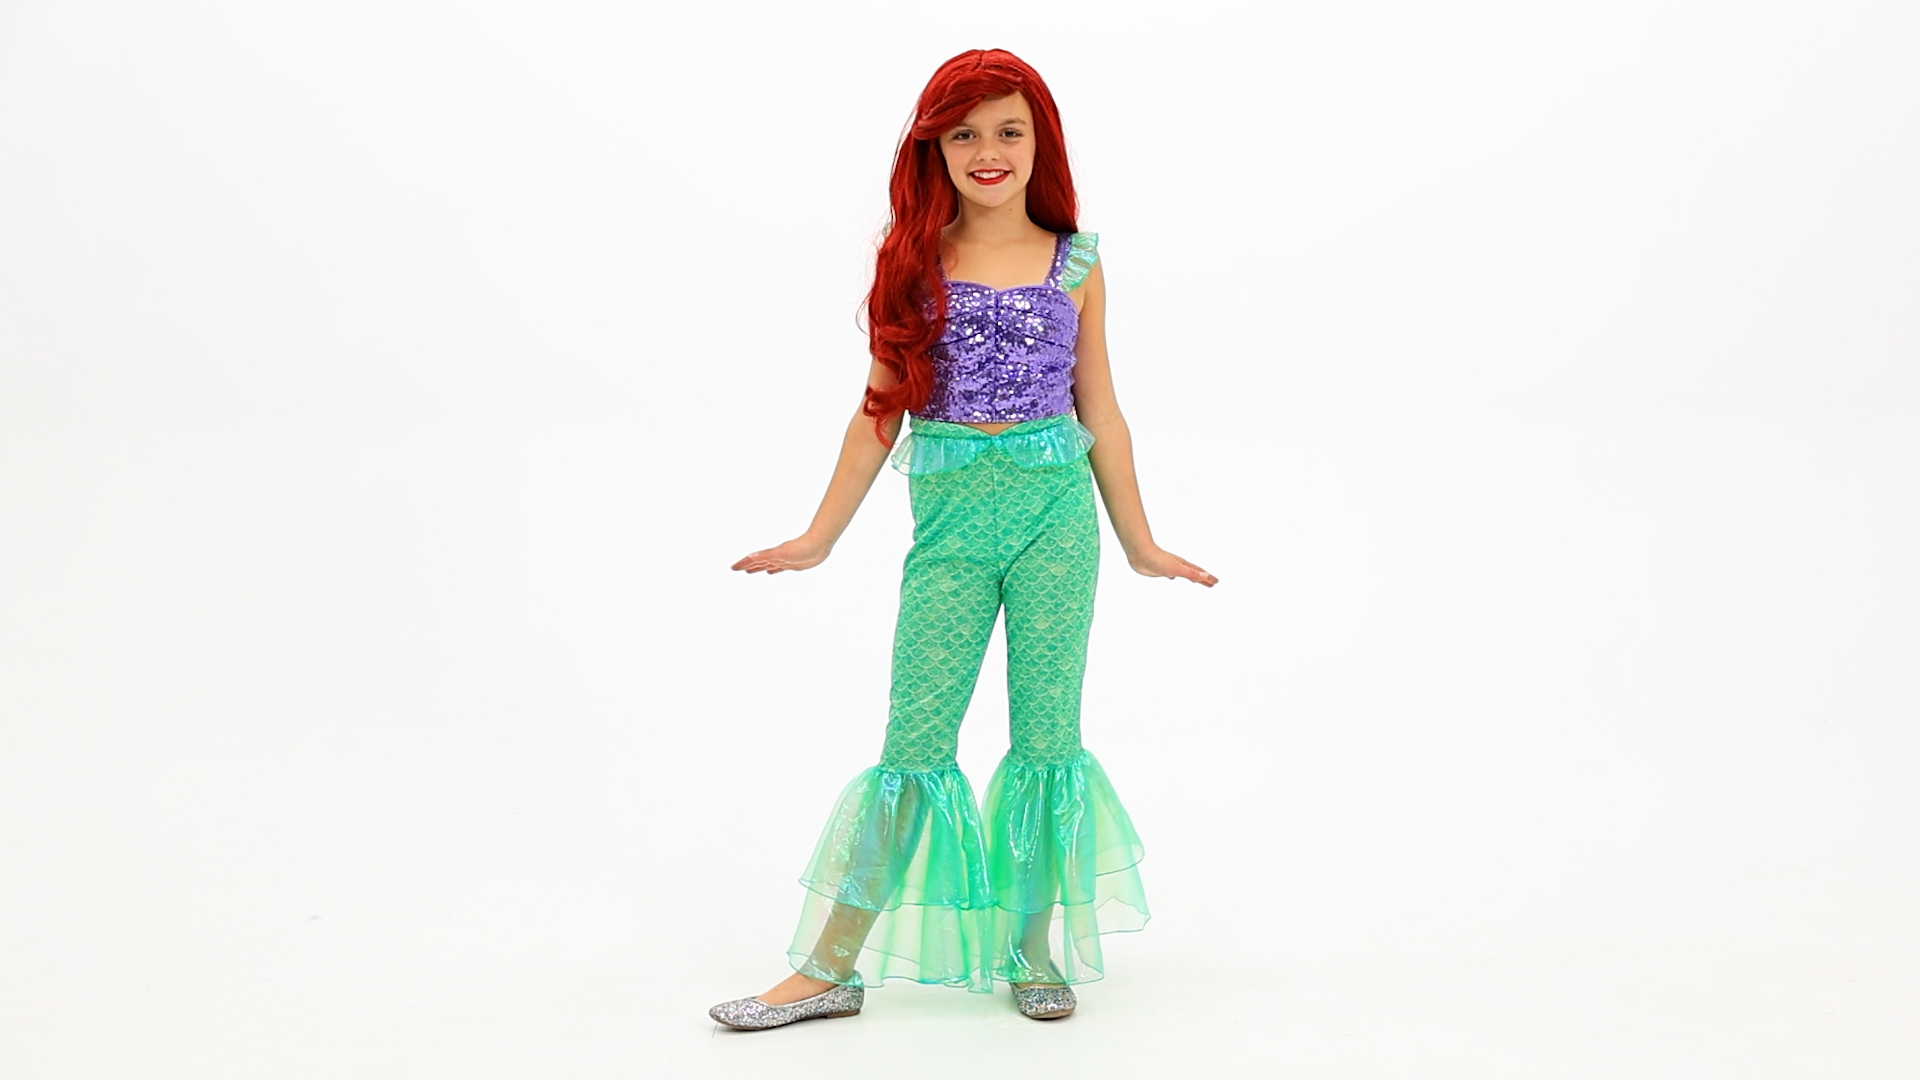 FUN4885CH Girl's Disney The Little Mermaid Ariel Costume Outfit